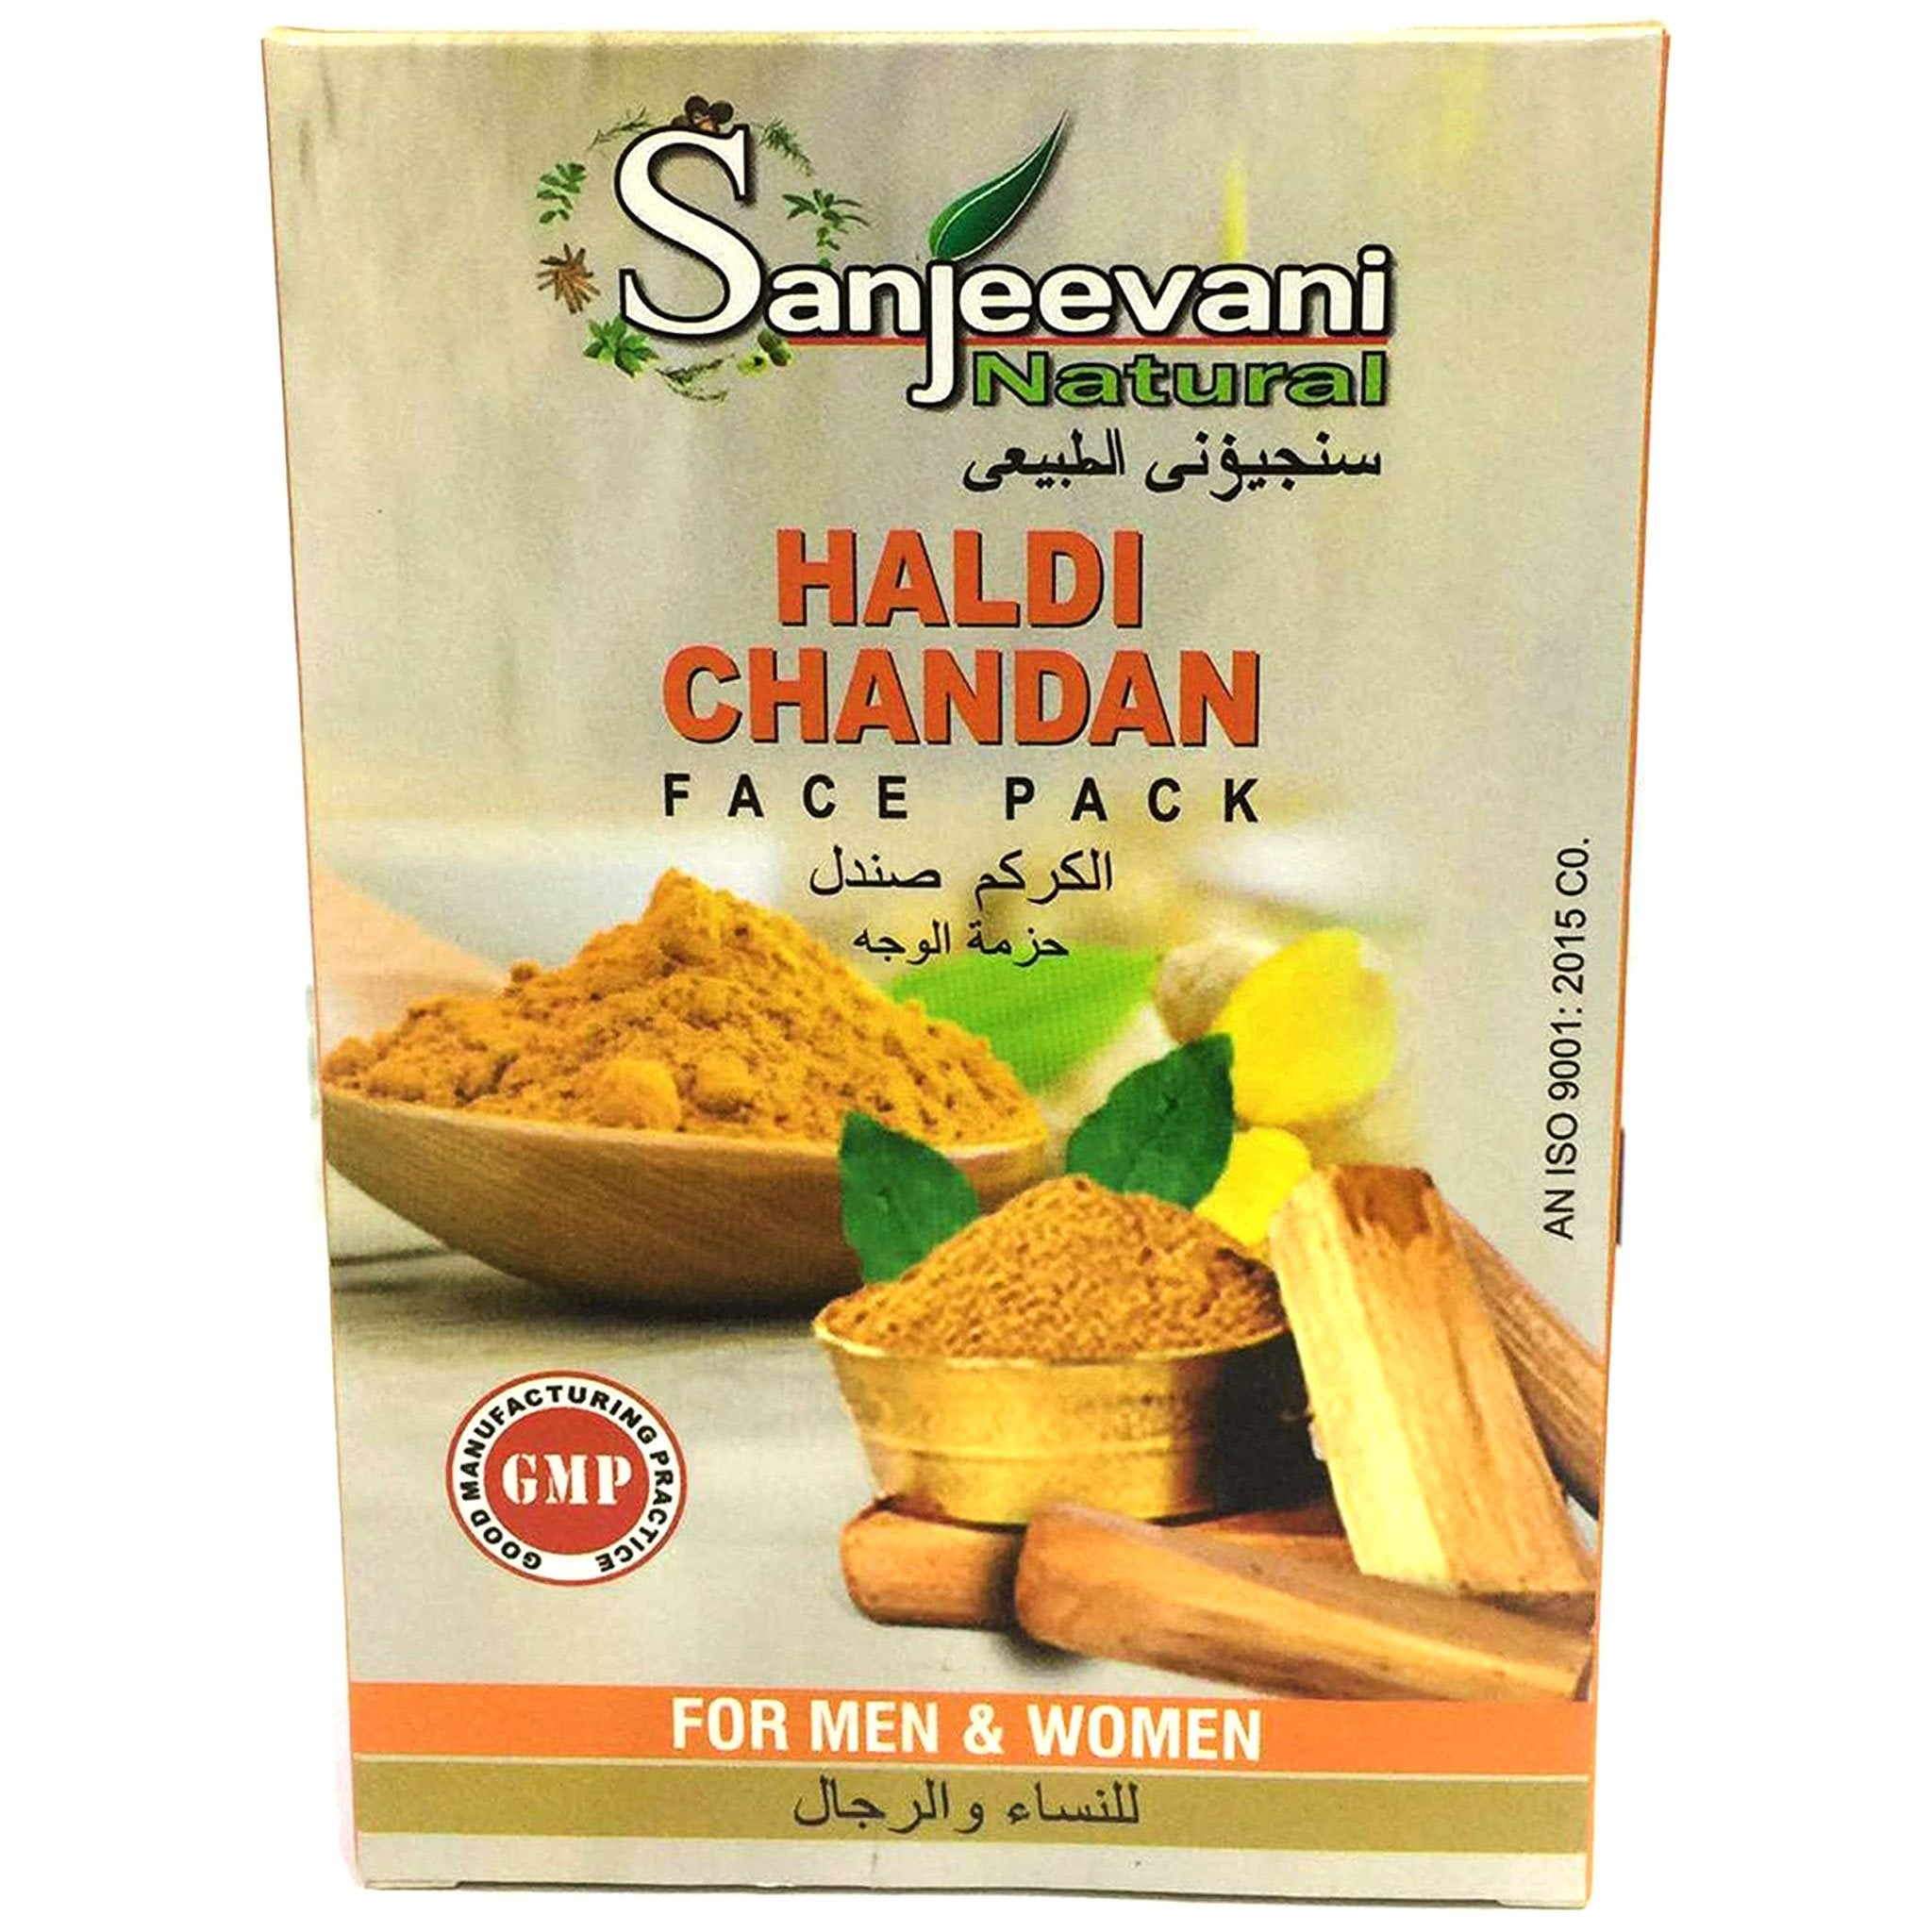 Sanjeevani Natural Haldi Chandan Face Pack 1box4x25g